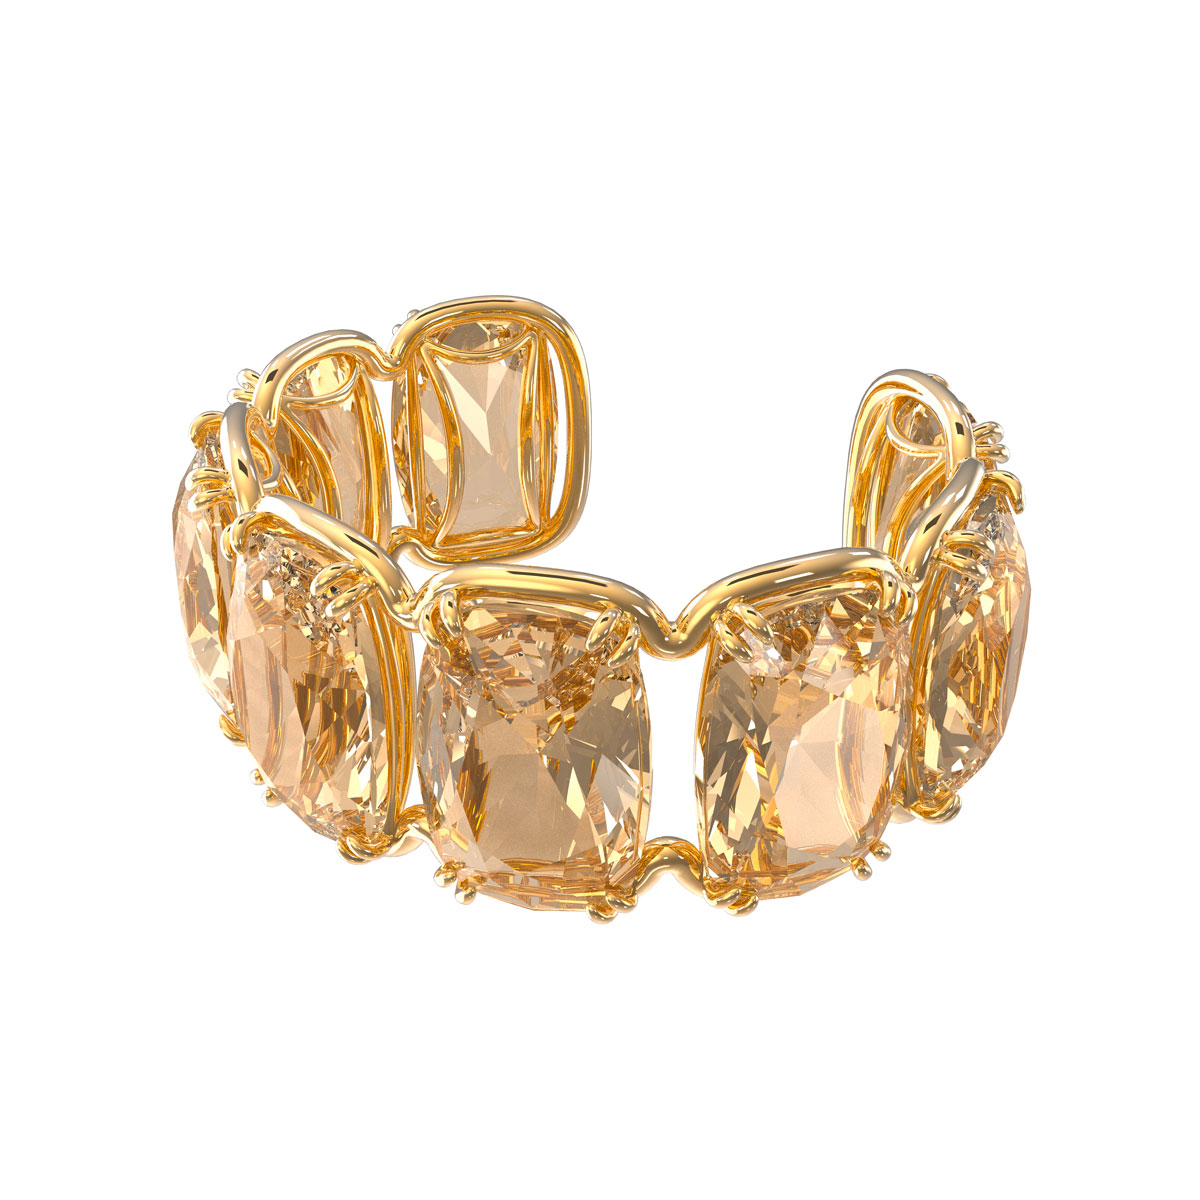 Swarovski Harmonia Cuff Bracelet, Oversized Floating Crystals, Yellow, Gold-Tone Plated